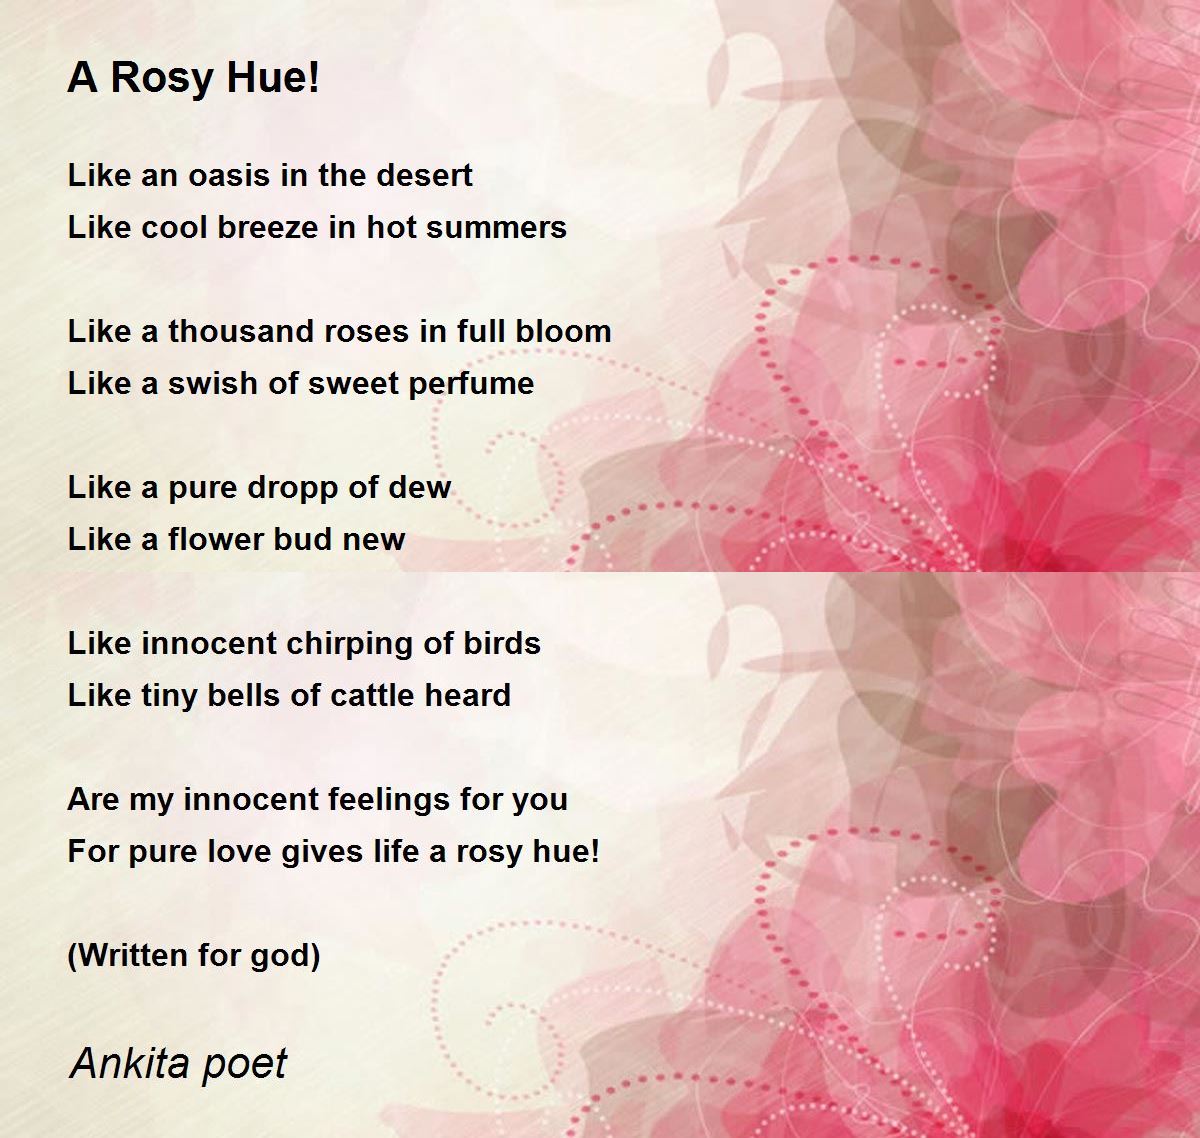 A Rosy Hue! by Ankita poet - A Hue! Poem